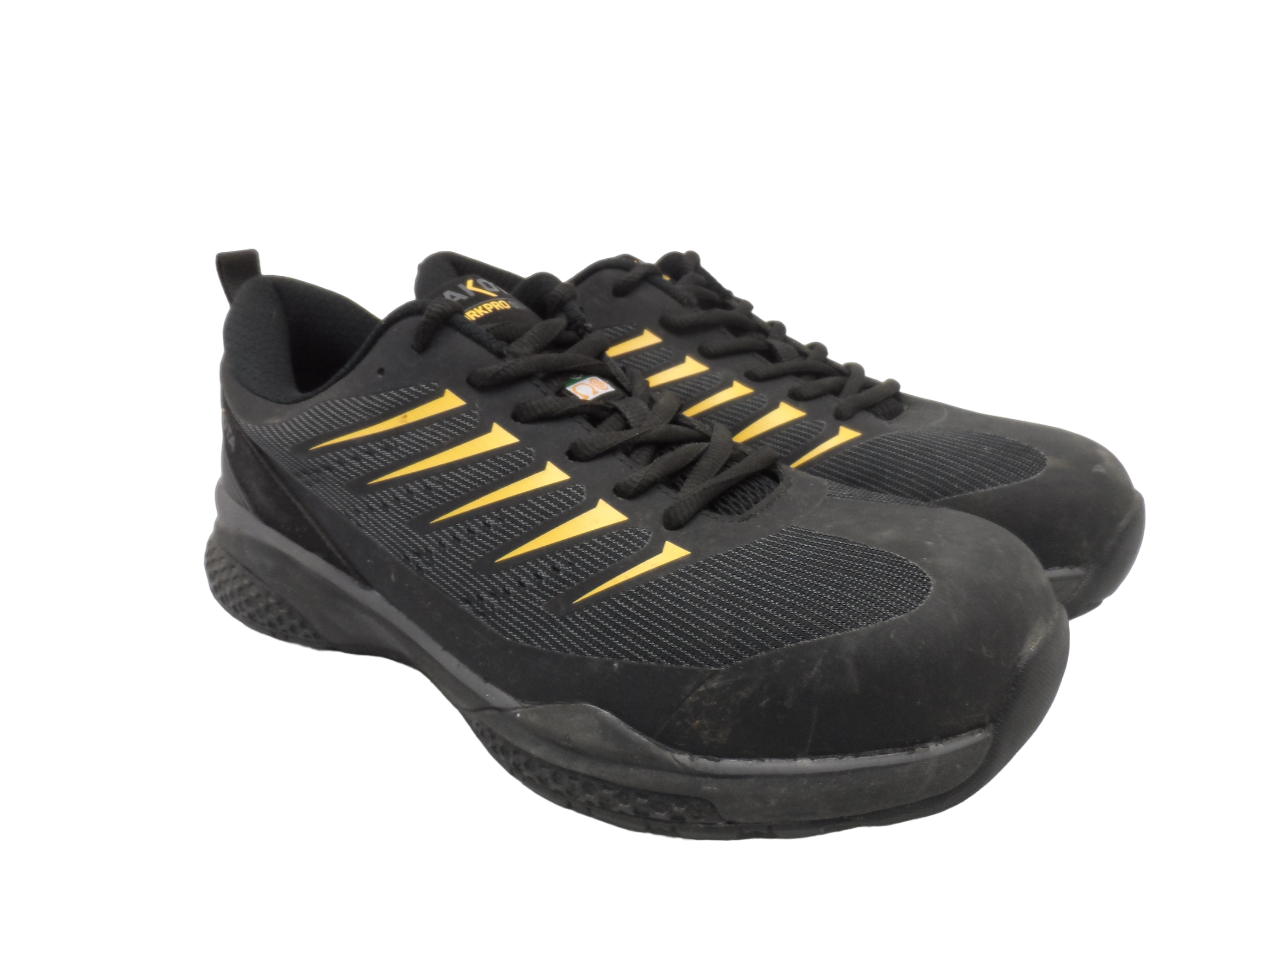 Primary image for DAKOTA Mens Aluminum Toe Comp Plate 3619 Quad Comfort Work Shoes Black/Yellow 9M